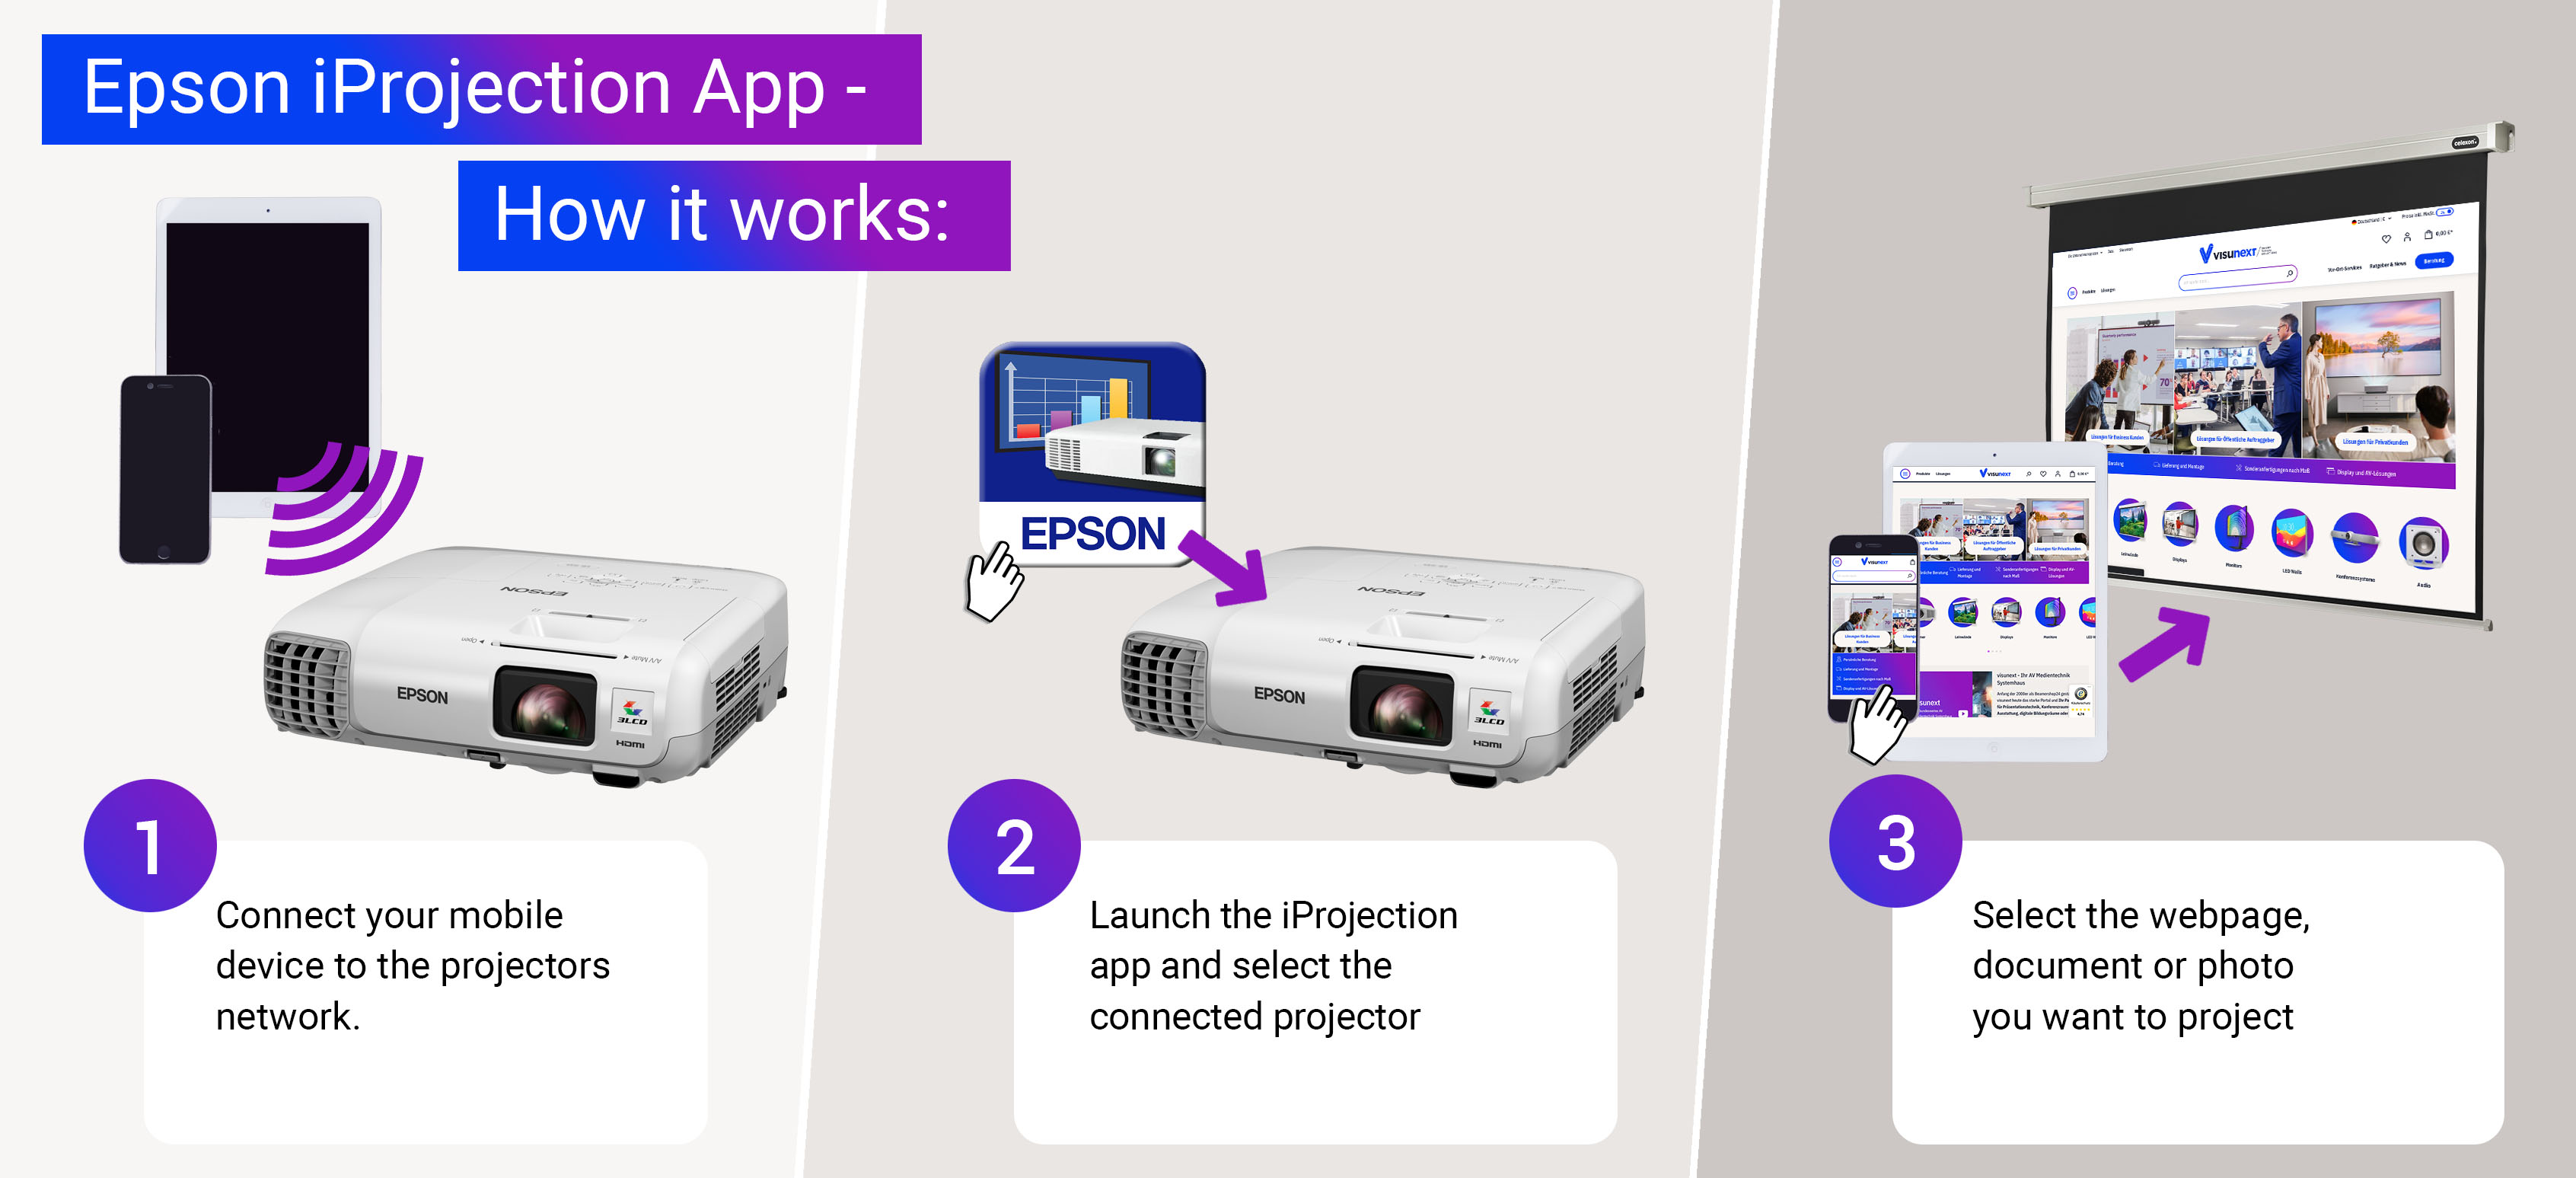 epson-iprojection-app-uk